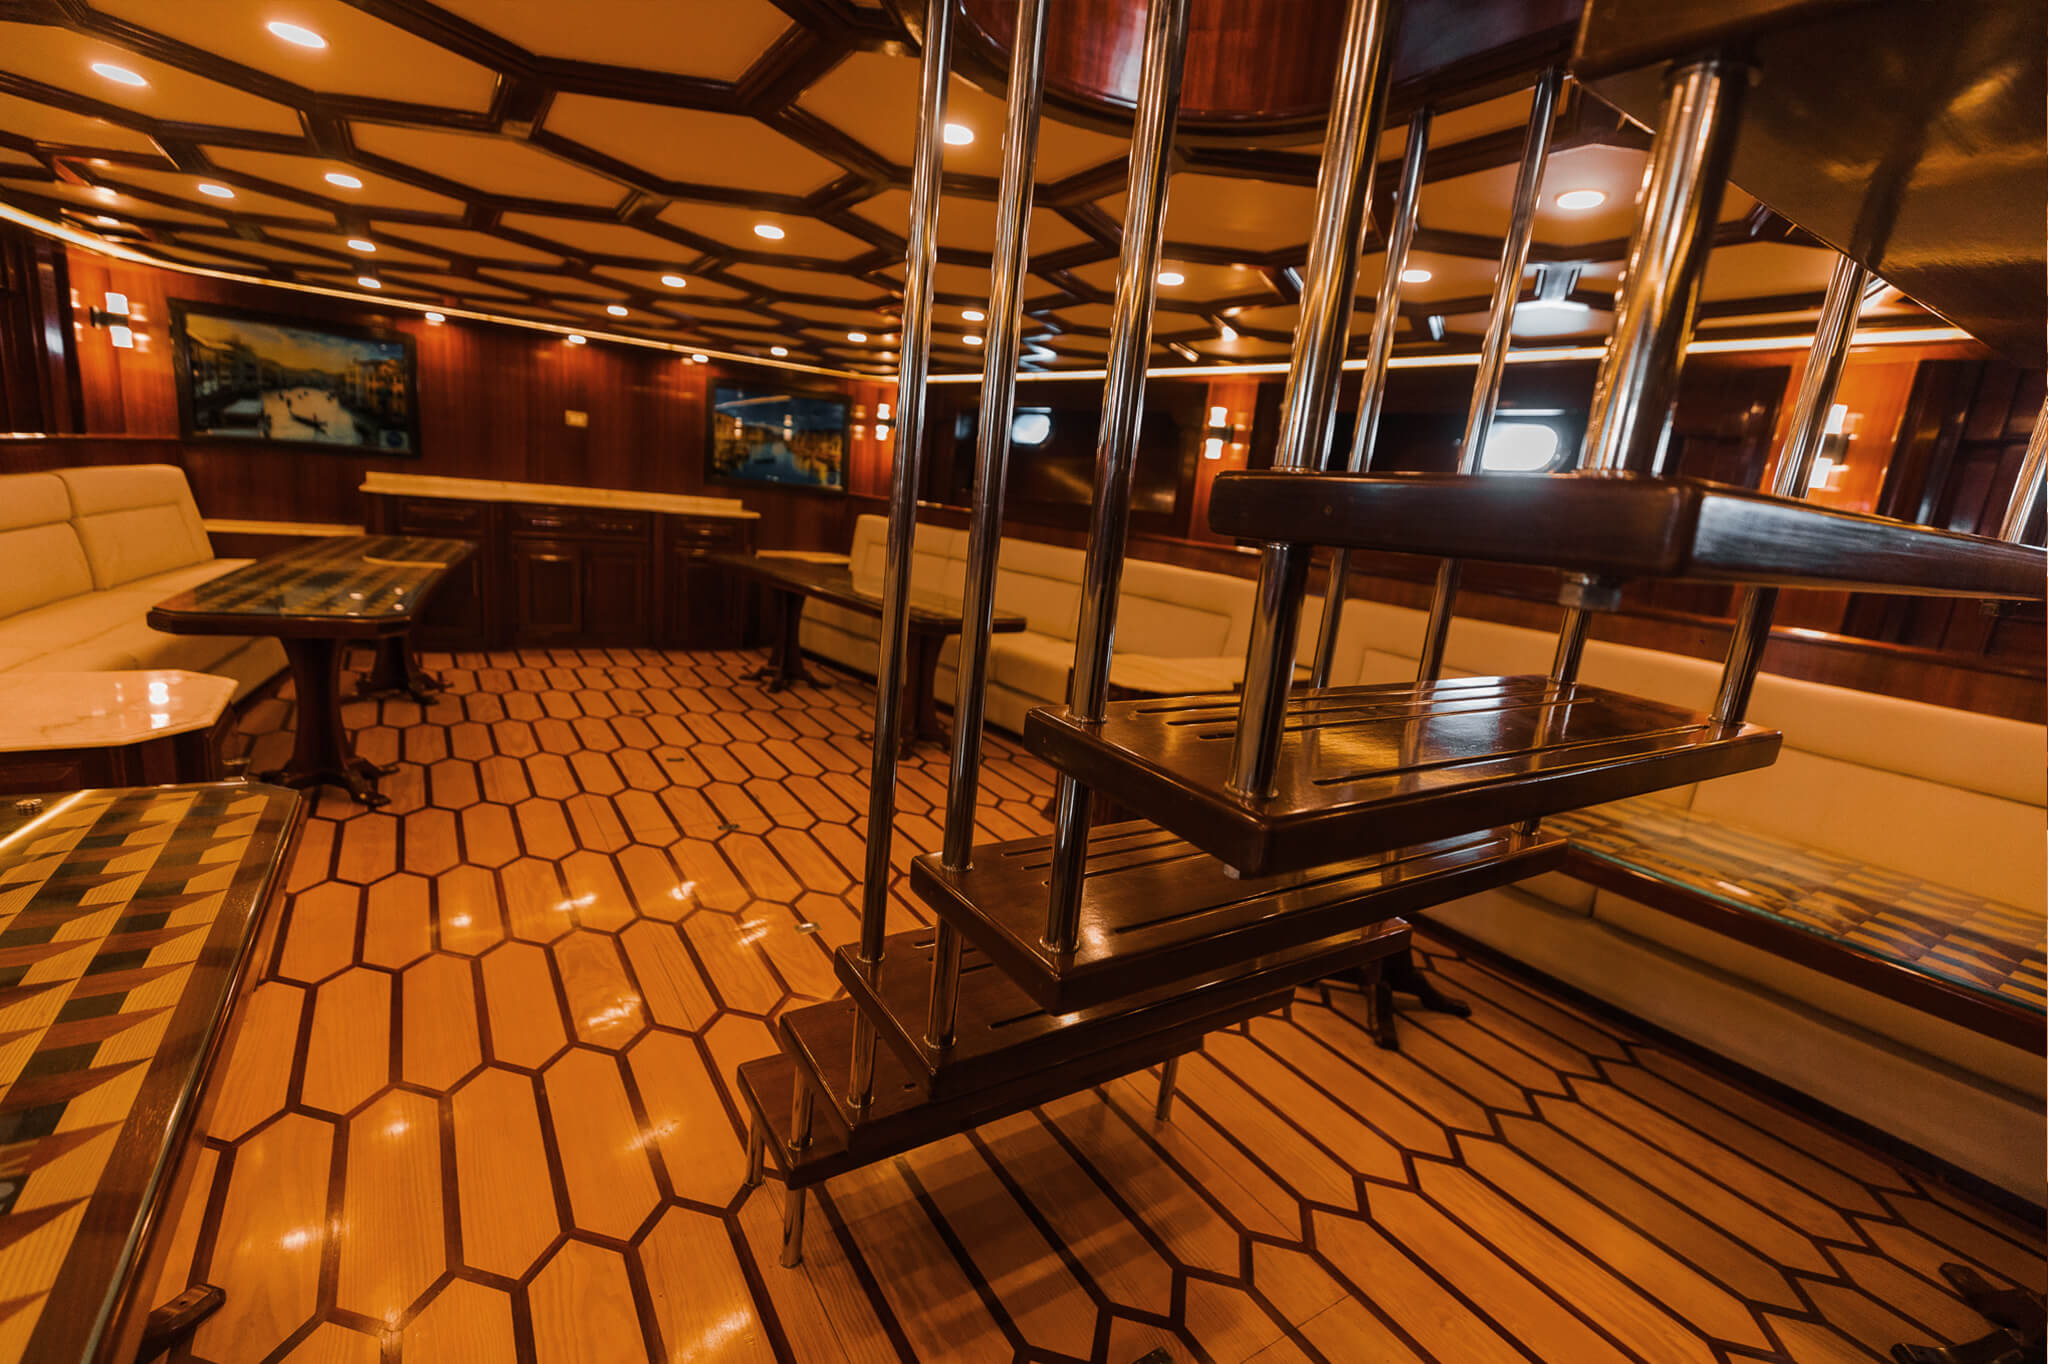 Royal cruise boat hurghada -luxury snorkeling interior4